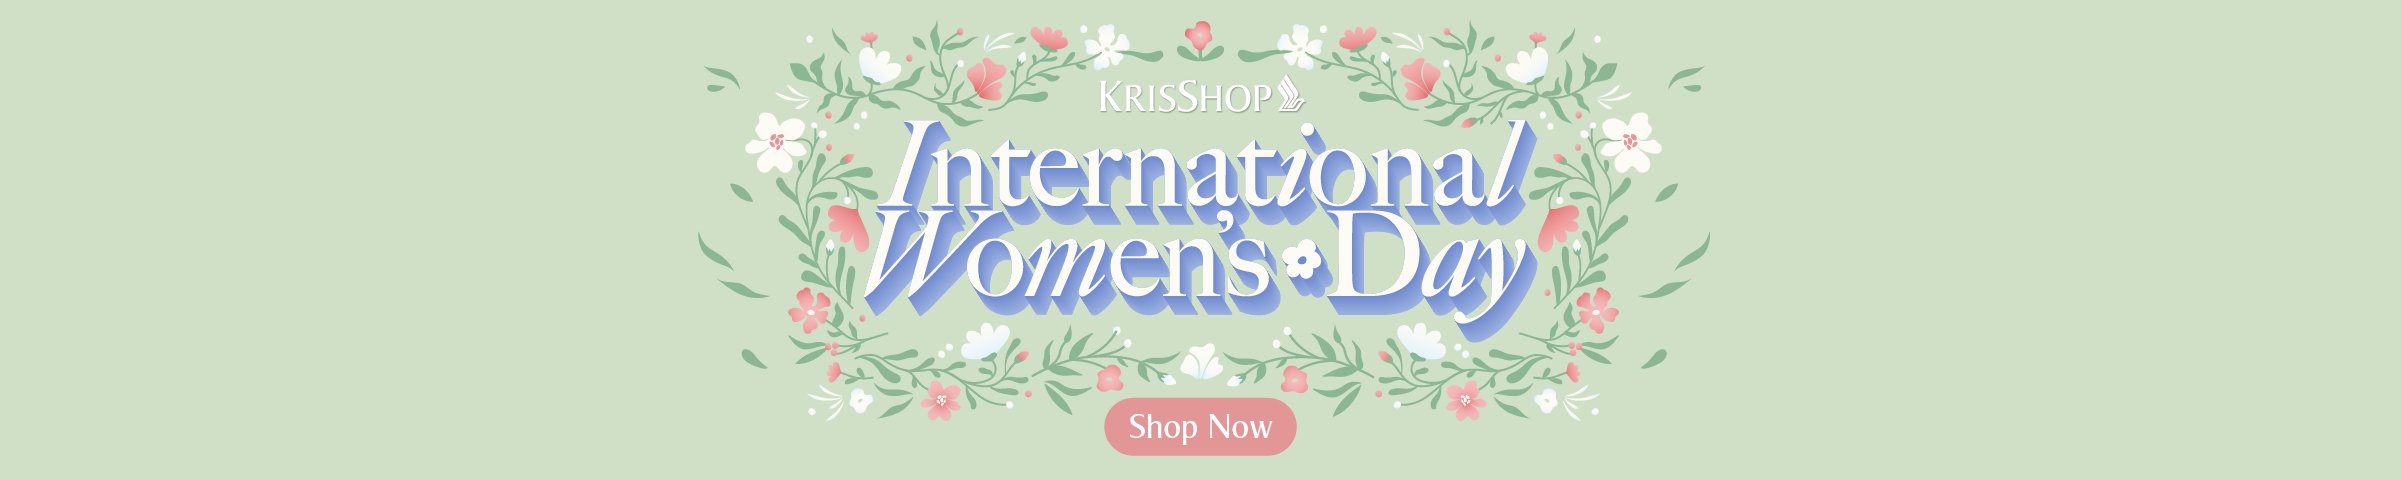 KrisShop x International Women's Day